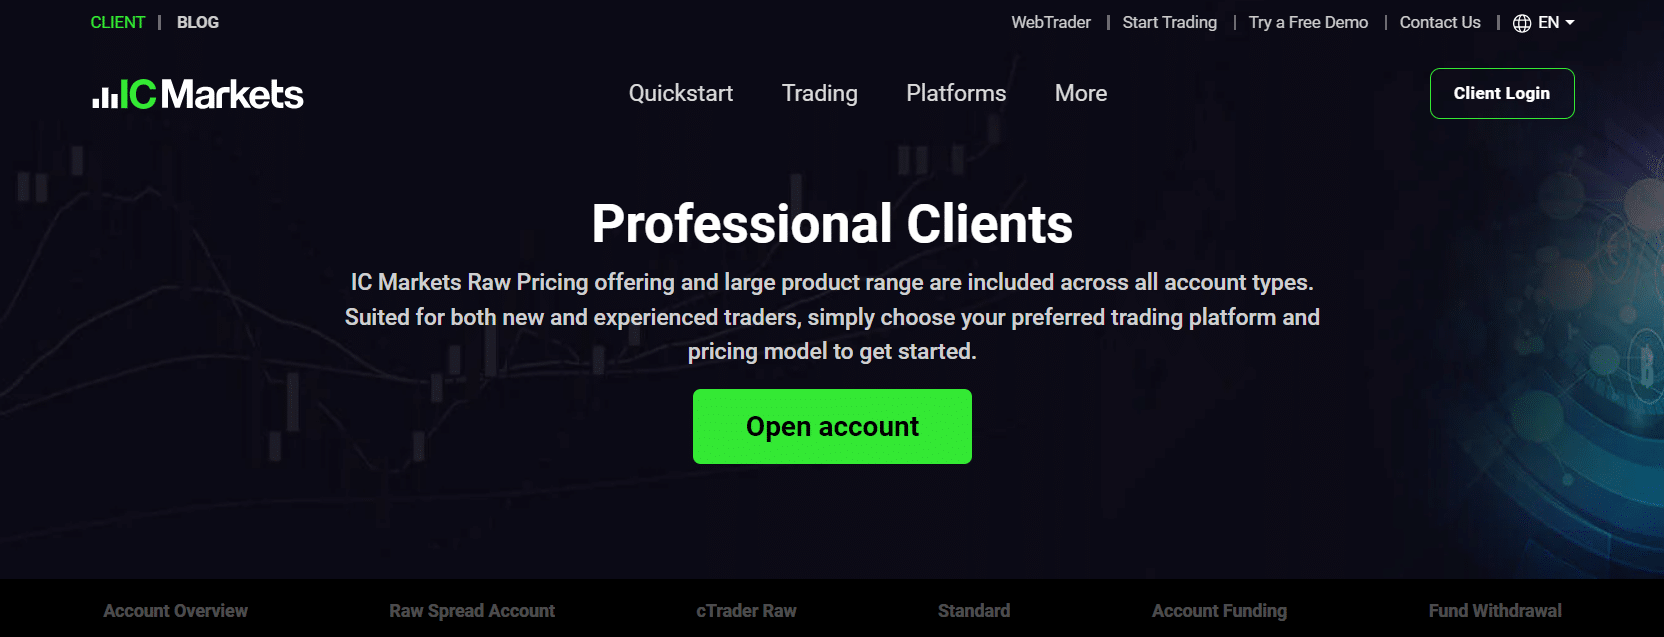 IC Markets Professional Account